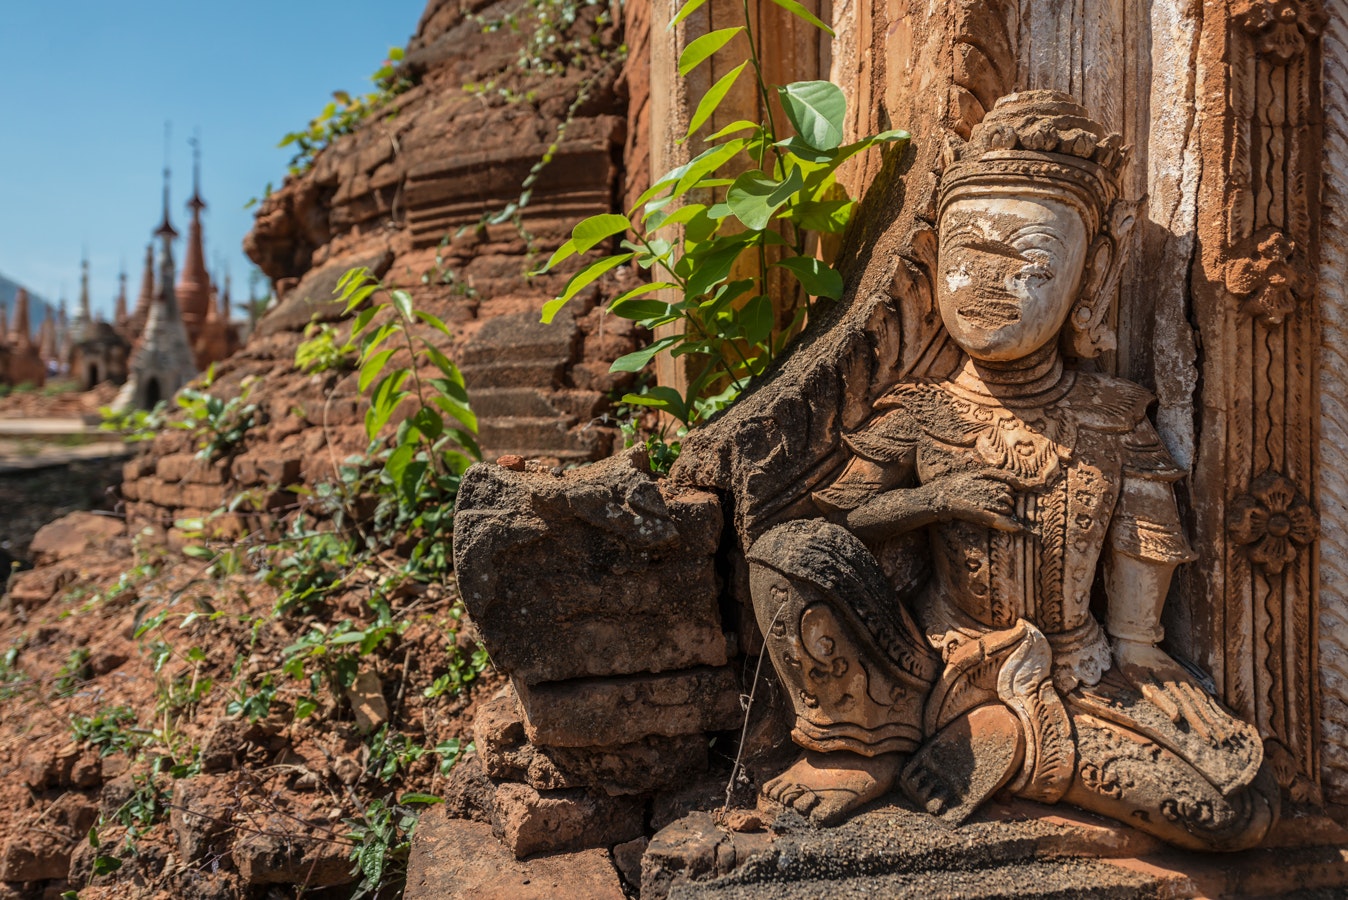 Buddhist statues